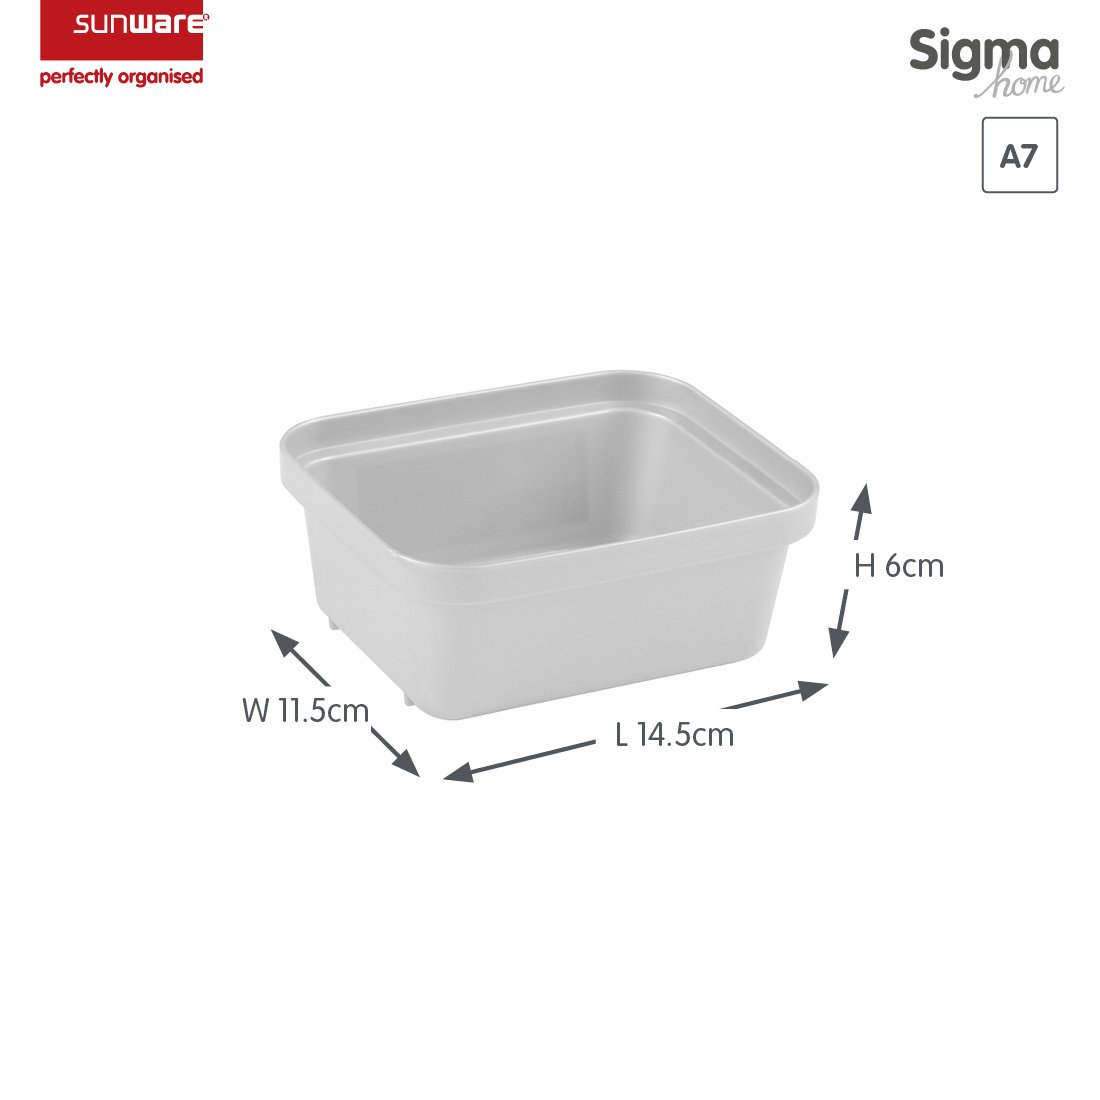  Sigma home Vielzweckkorb A7 weiß aus recyceltem Material 